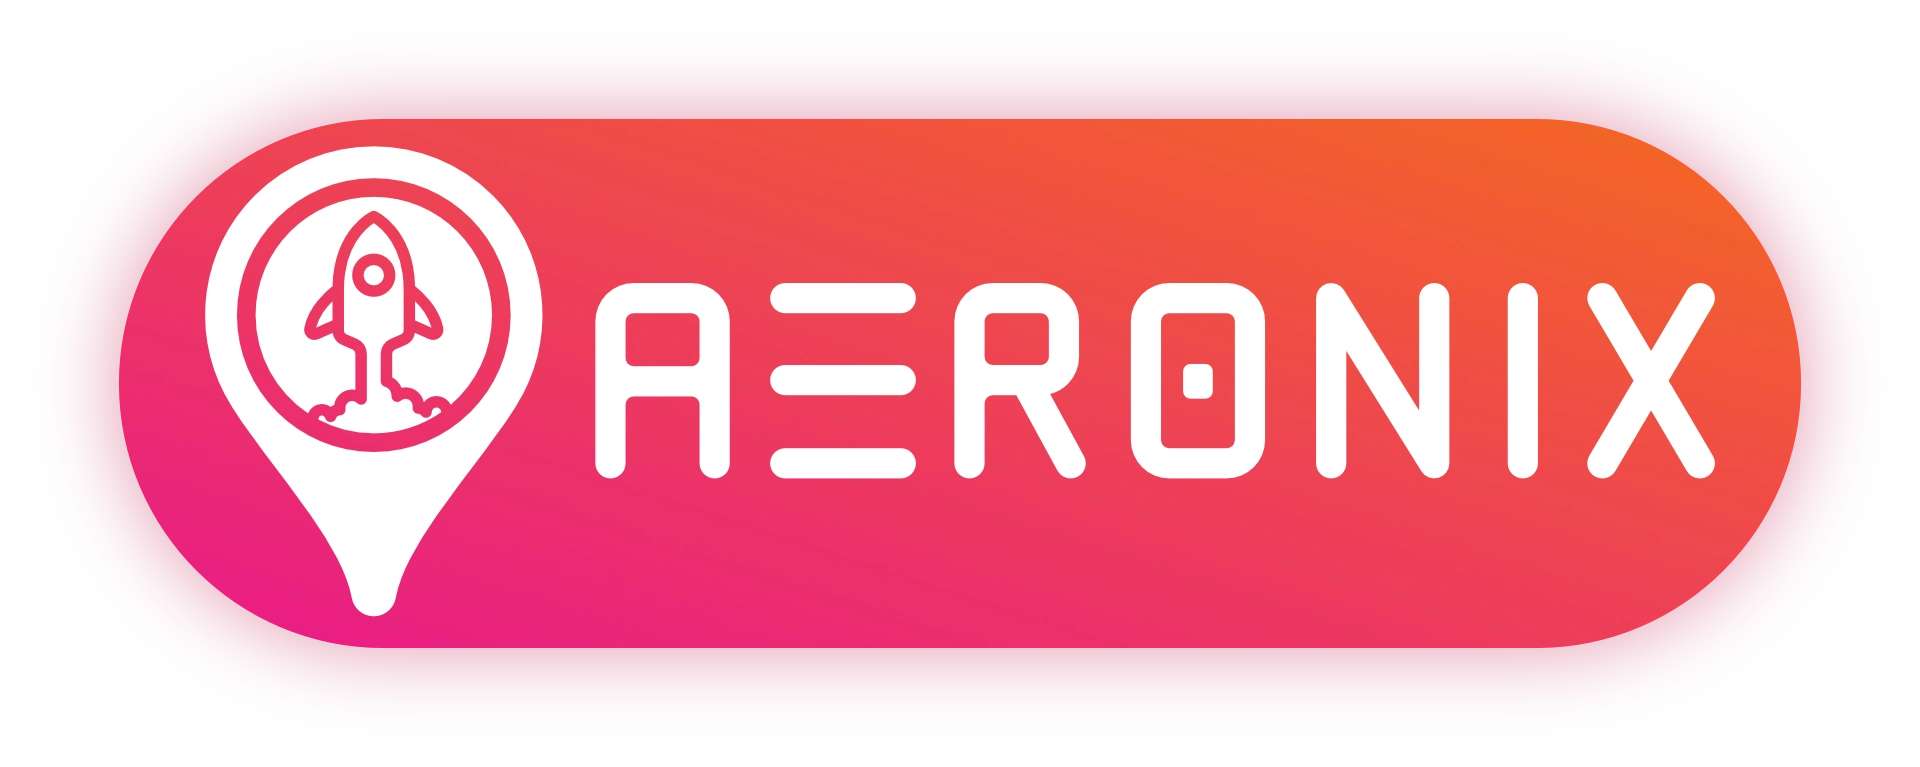 Aeronix Logo